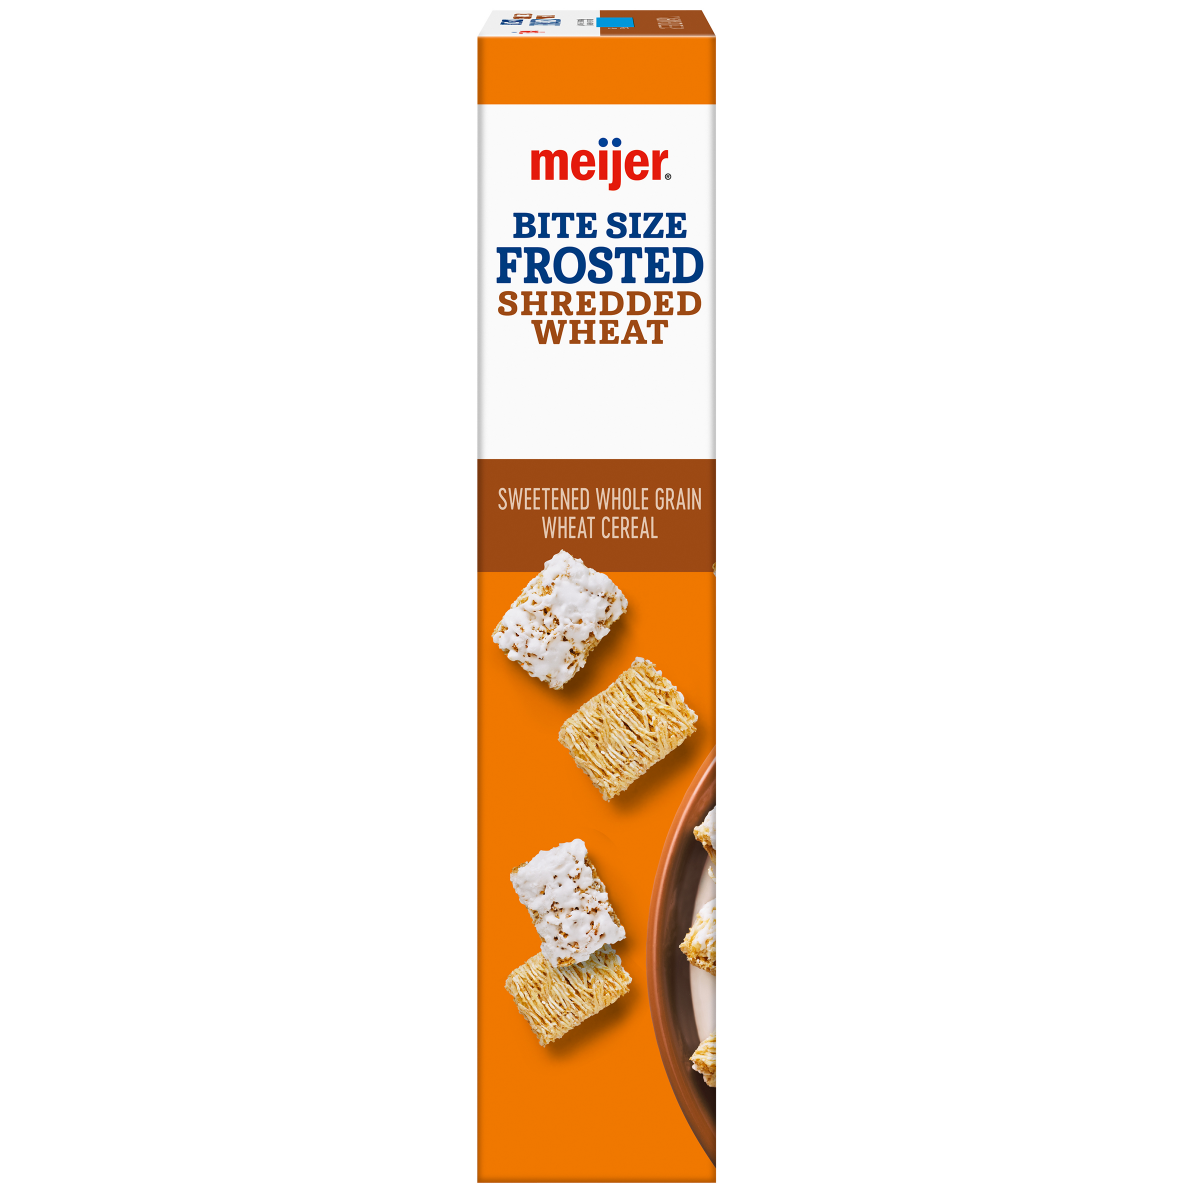 slide 14 of 29, Meijer Bite Sized Frosted Shredded Wheat Cereal, 18 oz